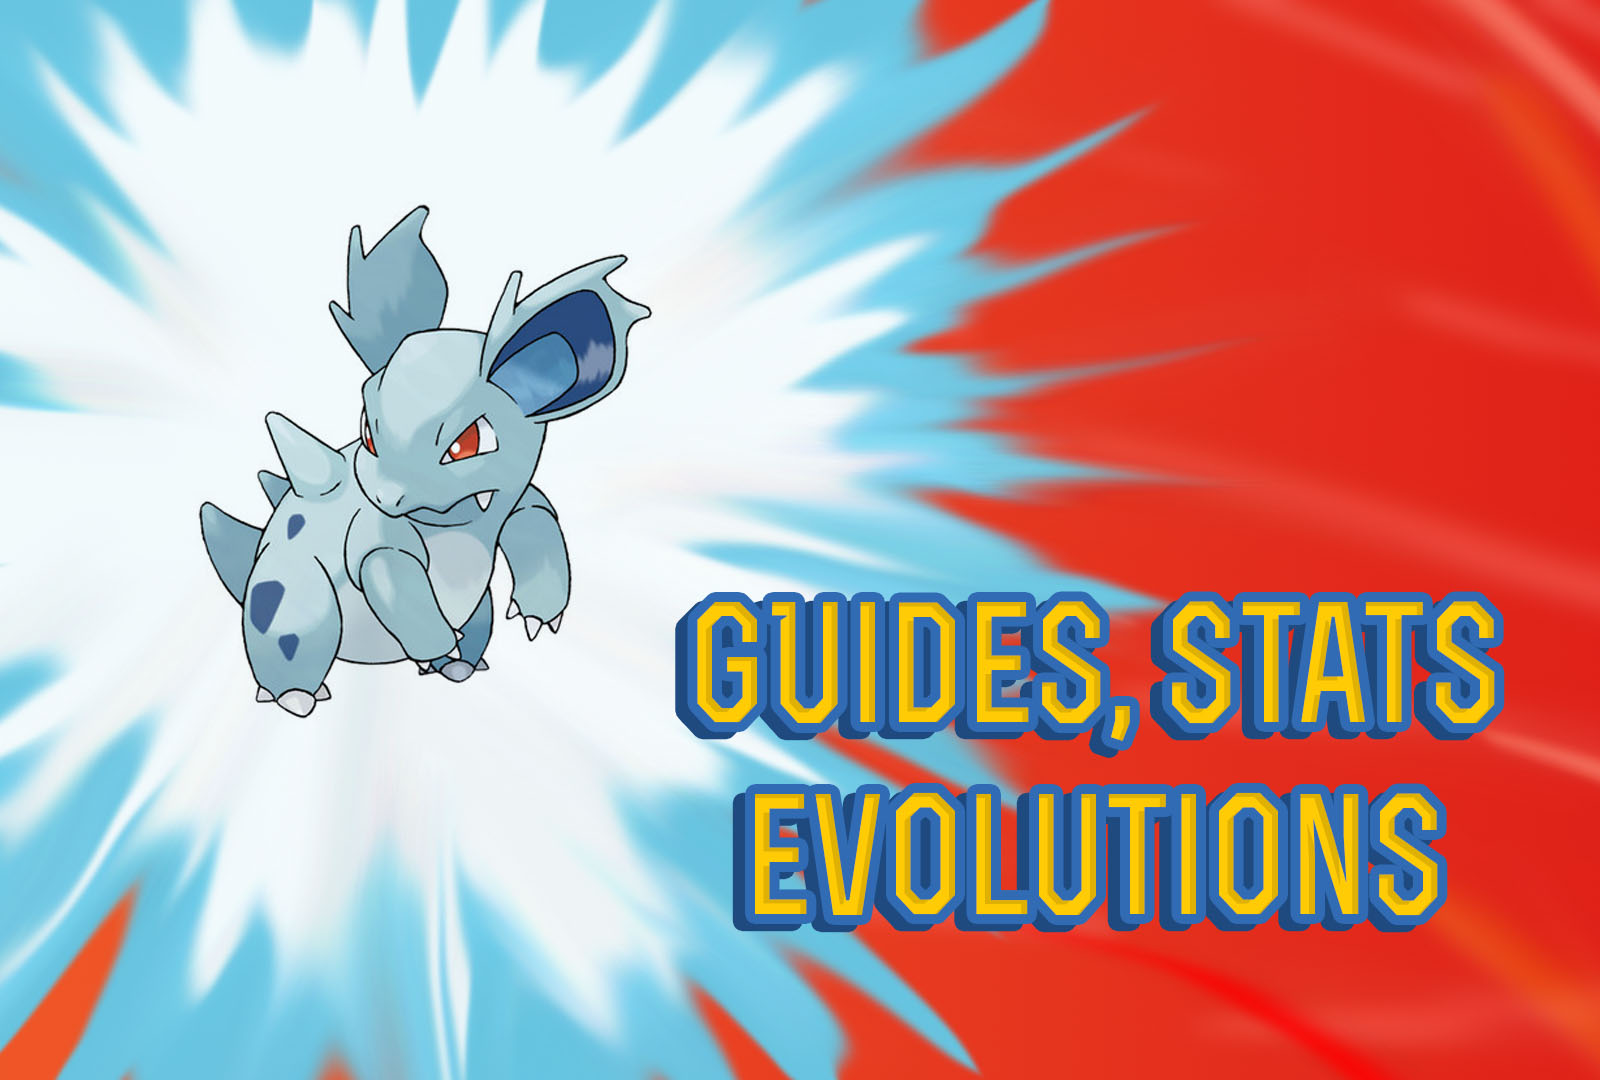 Pokemon Let’s Go Nidorina Guide, Stats & Evolutions